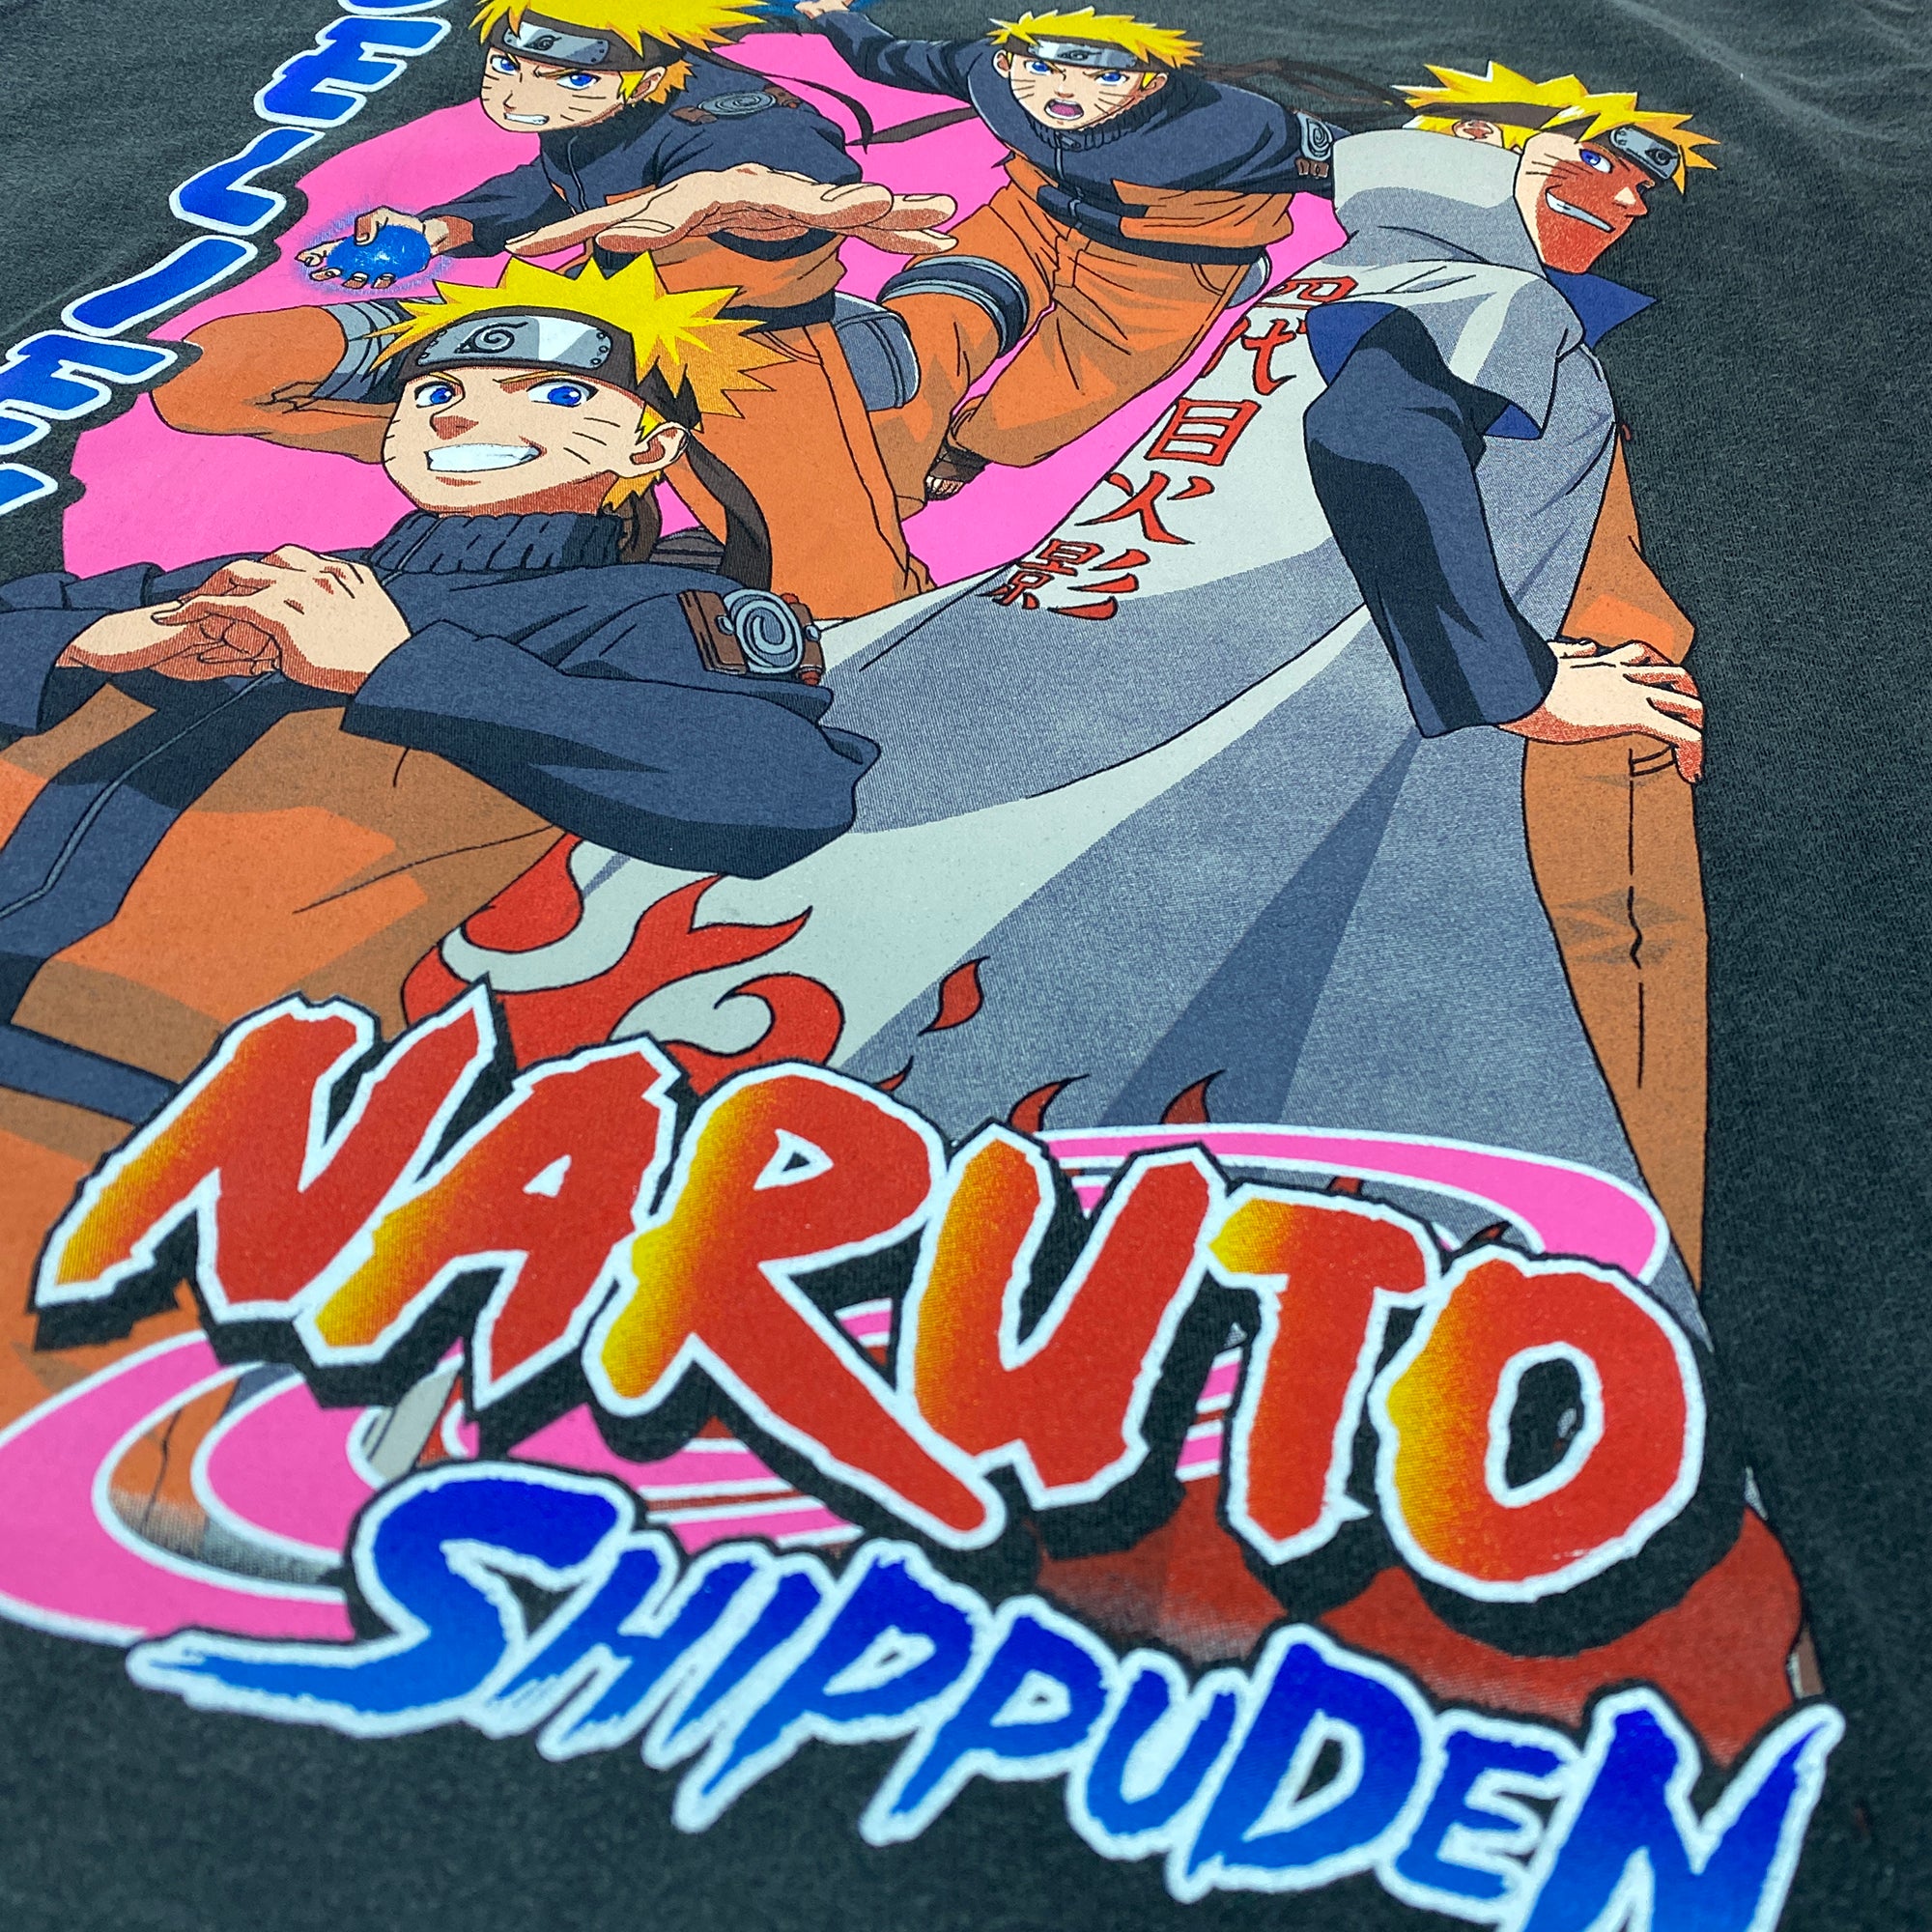 Naruto - Believe It!!